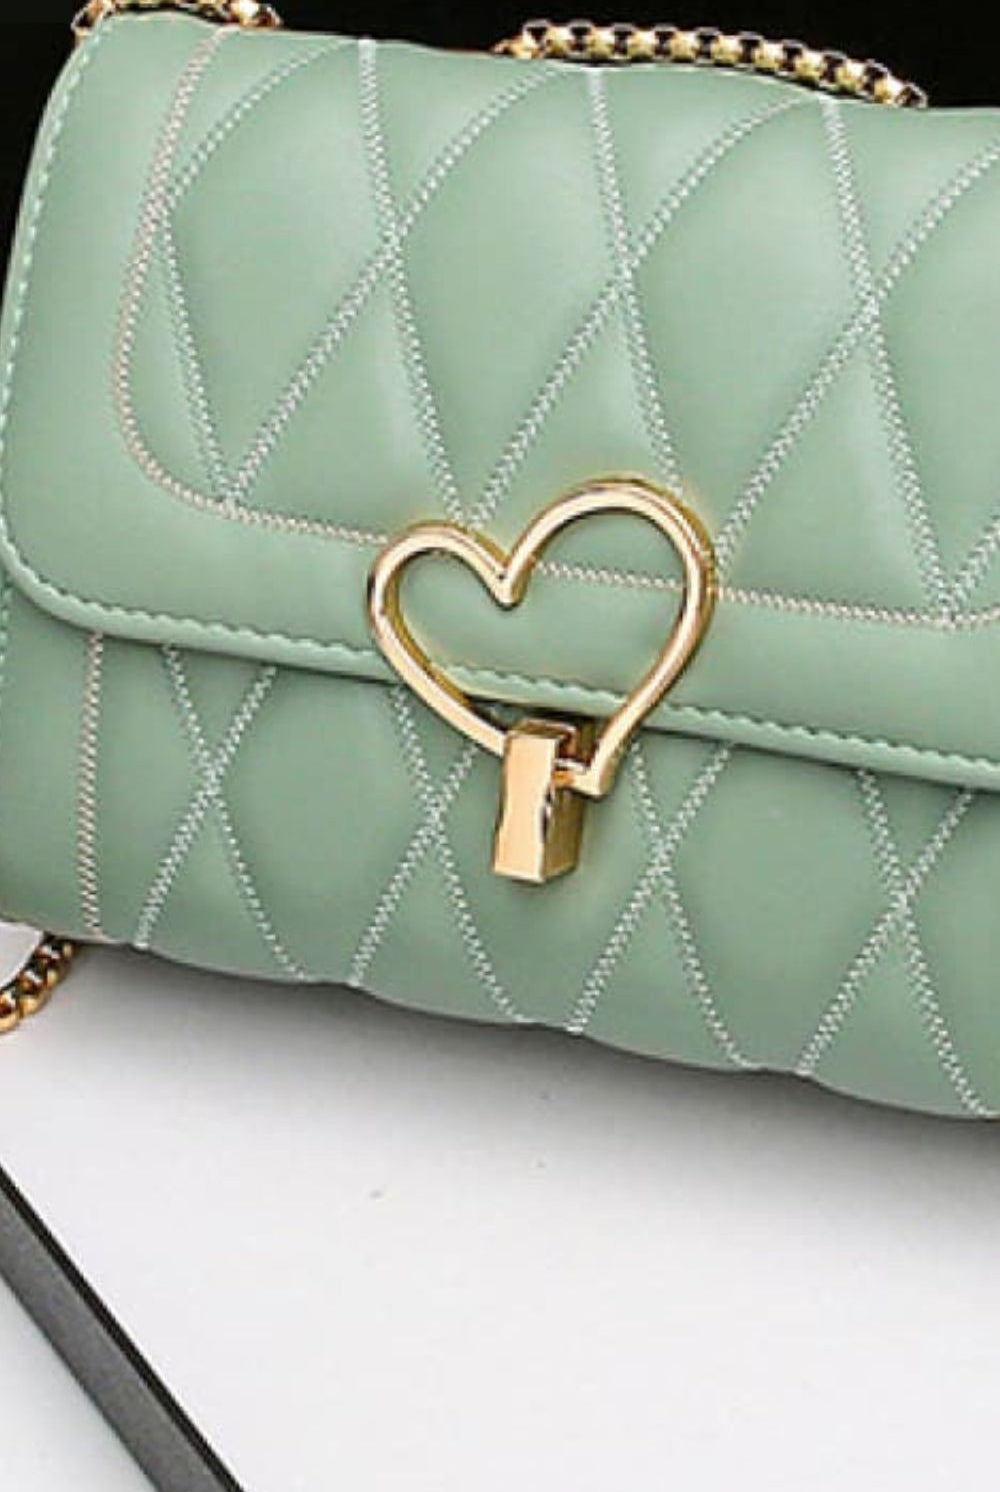 Dark Sea Green Her Style Heart Buckle PU Leather Crossbody Bag Handbags